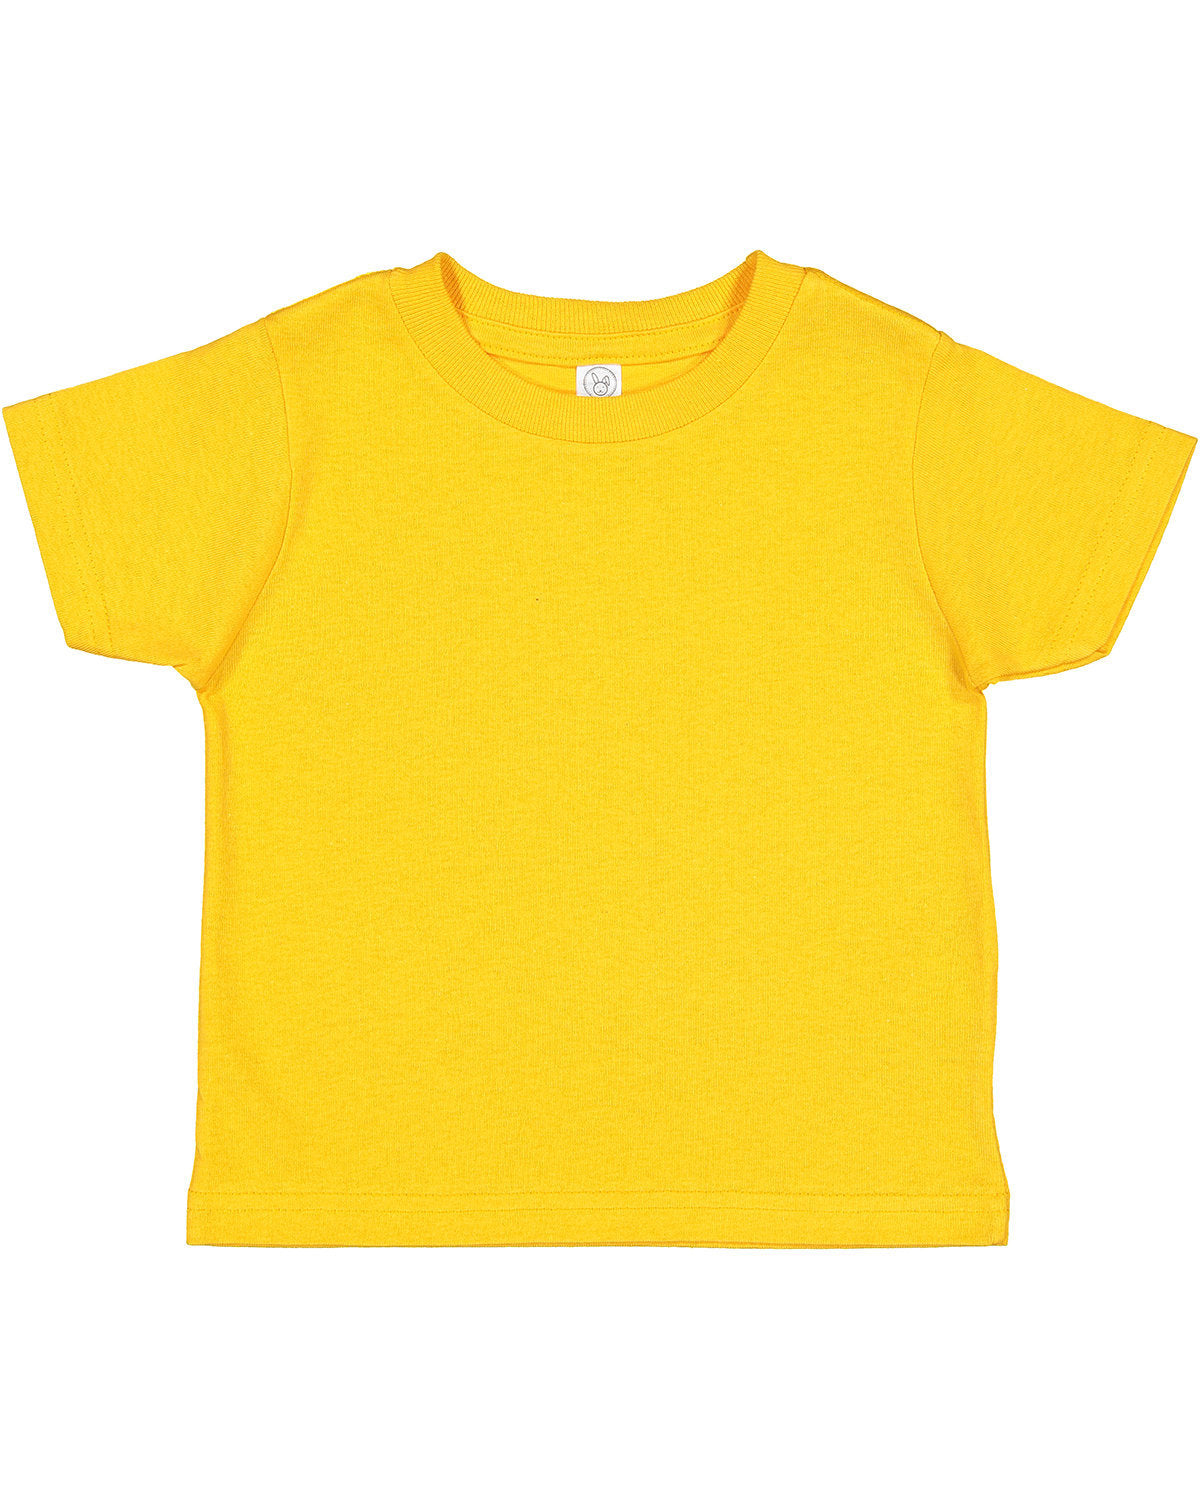 Rabbit Skins Toddler Cotton Jersey T-Shirt 2T / Gold